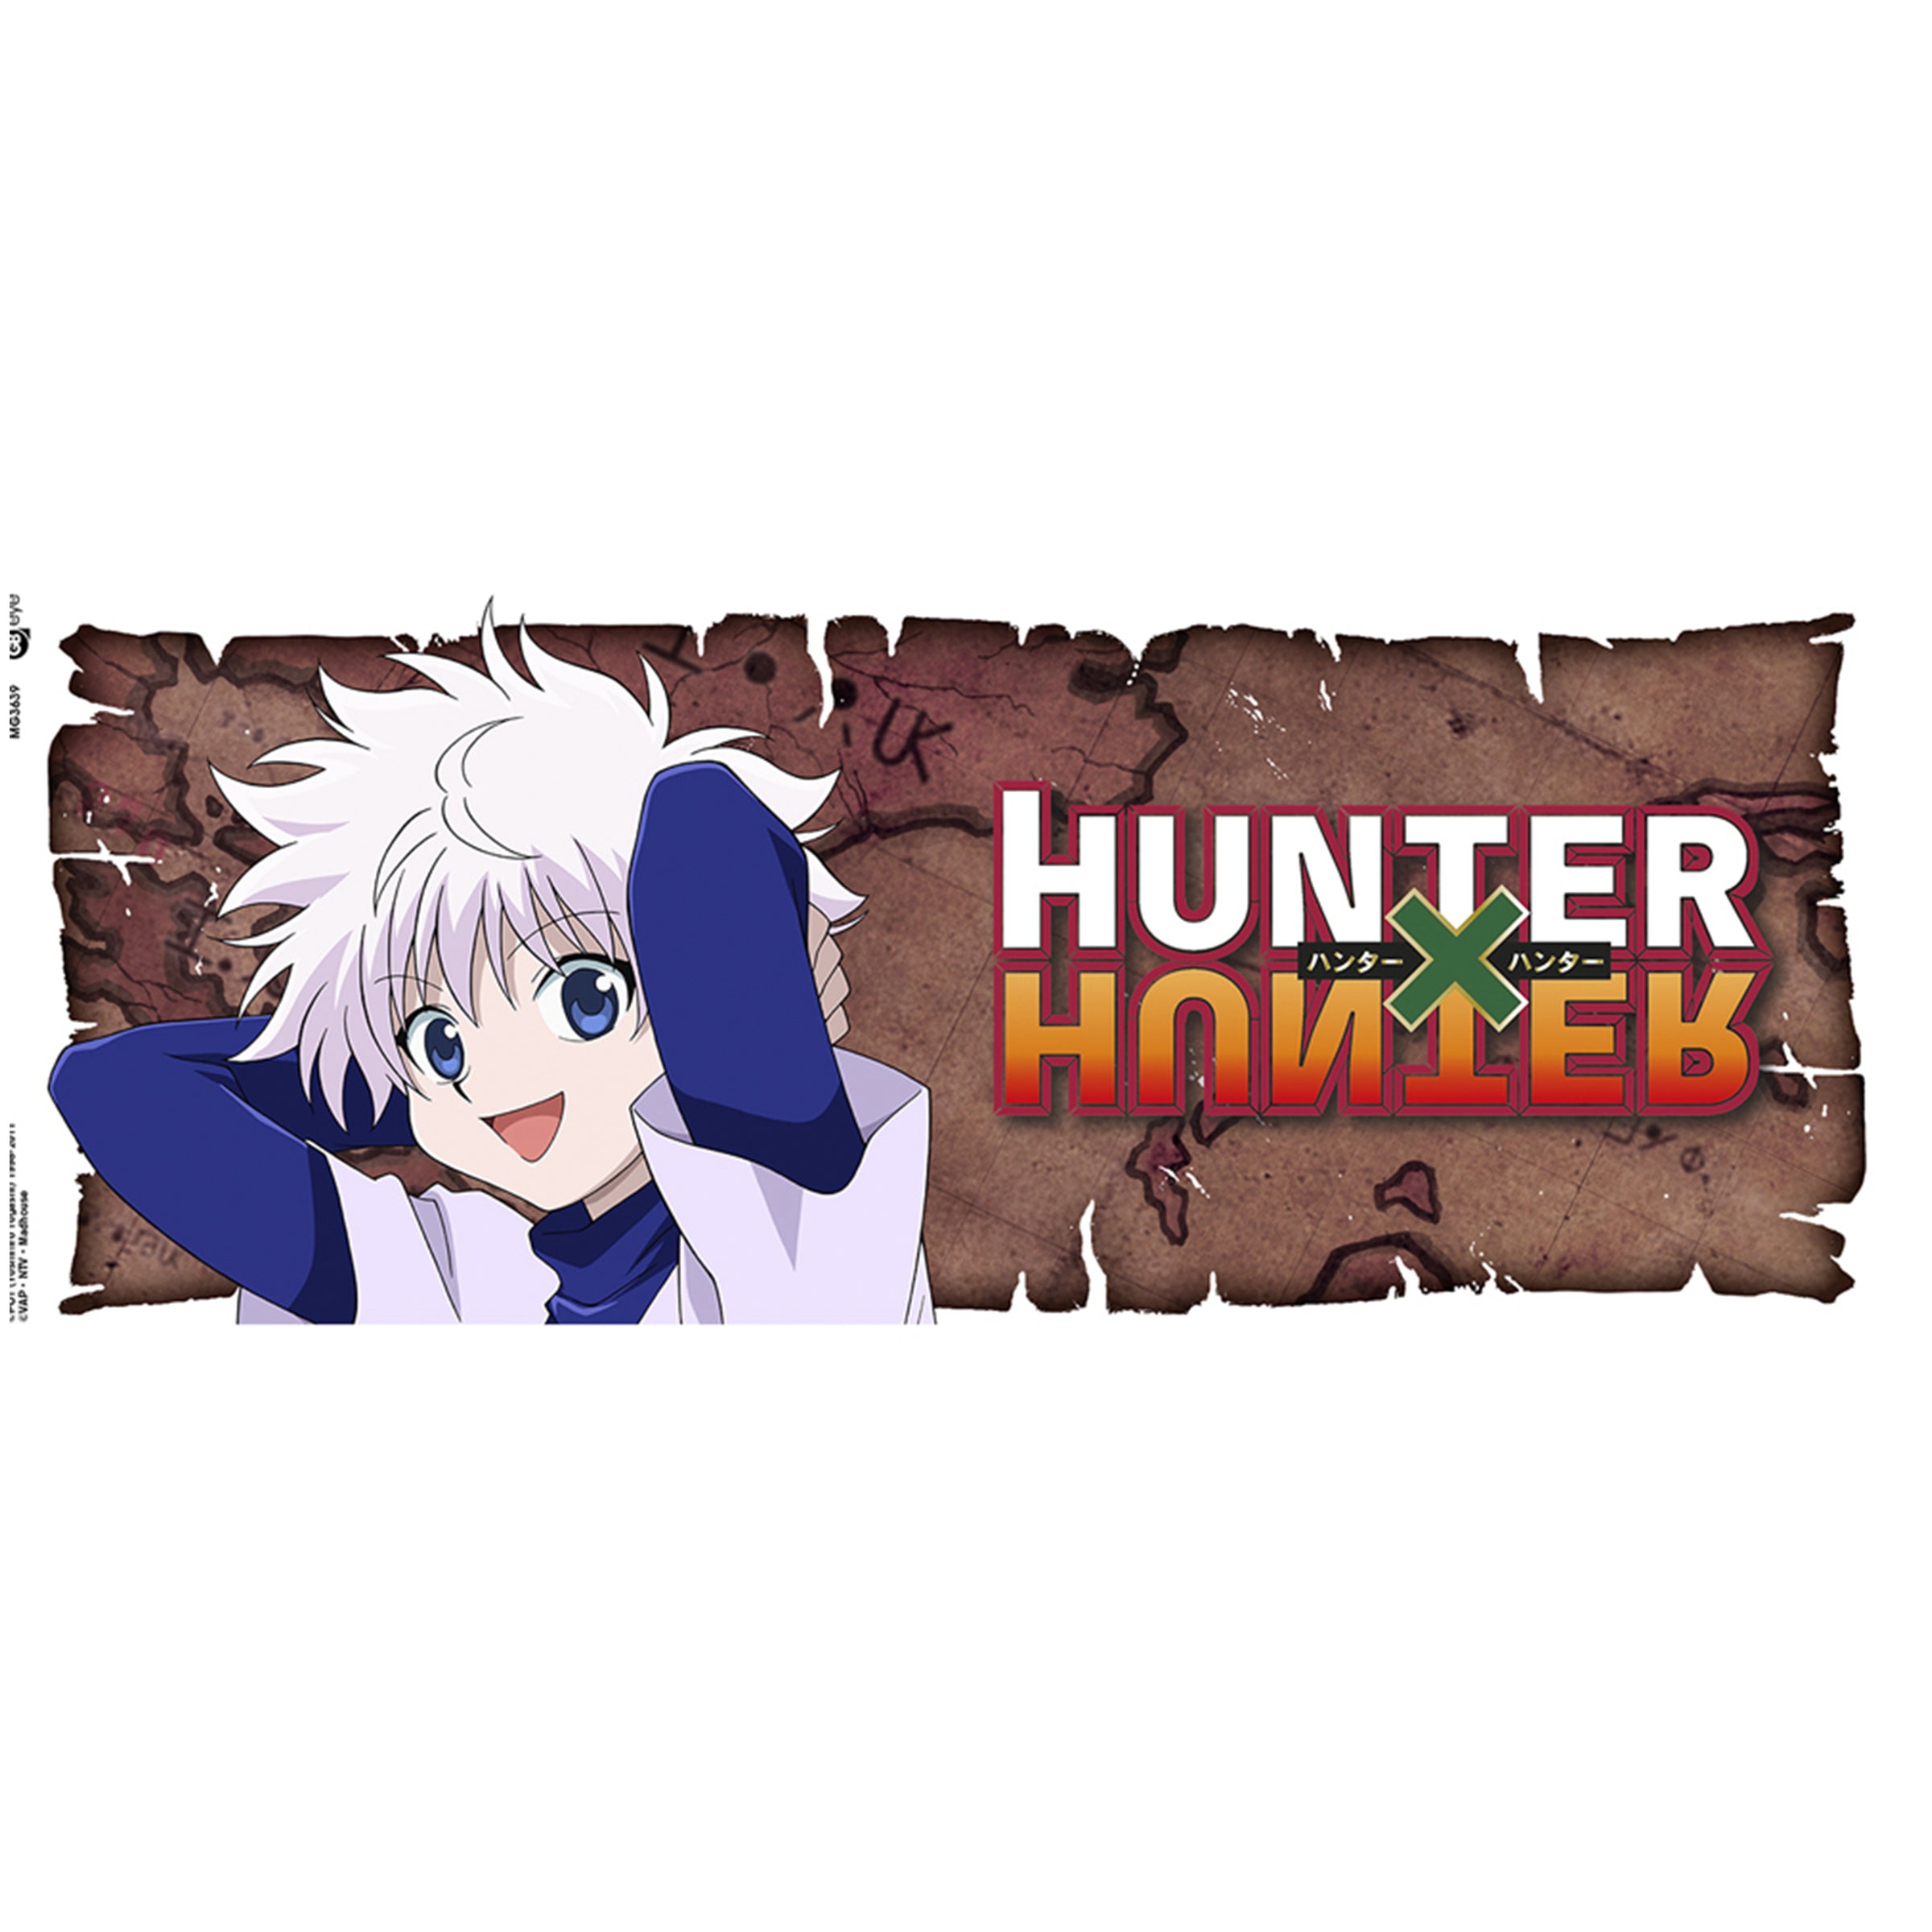 10 Anime like Hunter x Hunter 